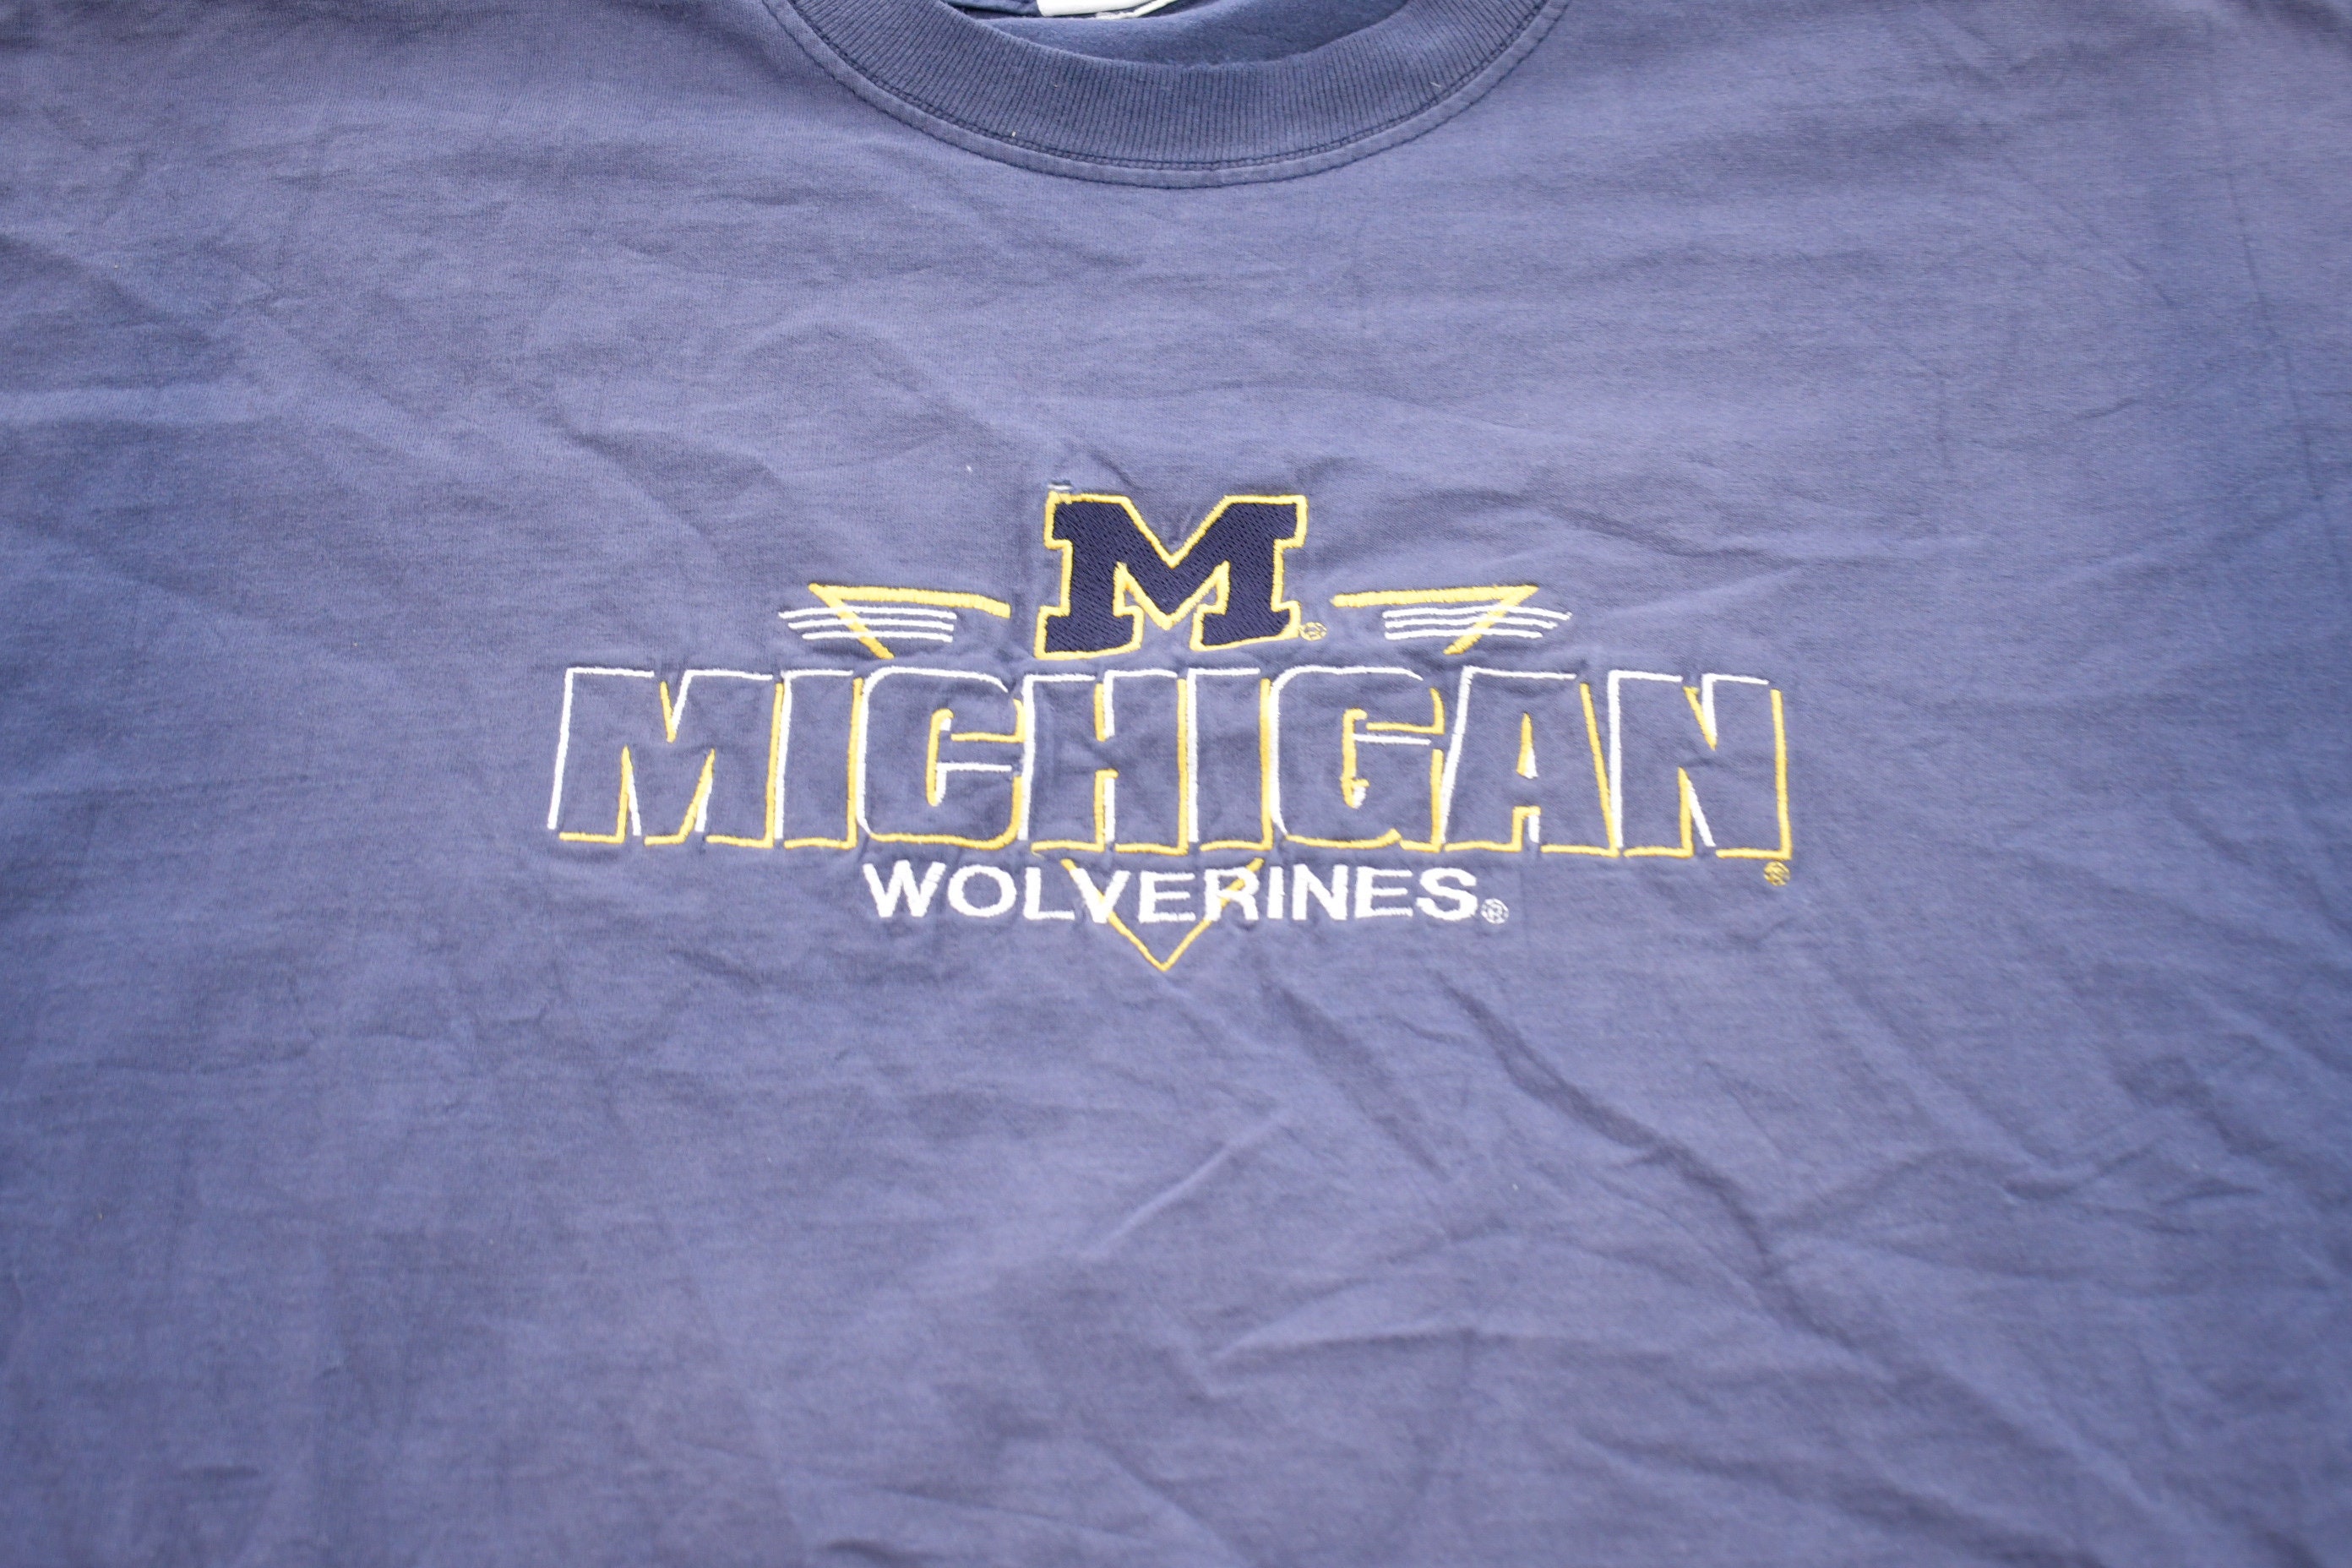 Vintage 1990s University of Michigan Wolverines Cropped T-Shirt  NCAA  90s Streetwear  Athleisure  Sportswear  Vintage Athleticwear